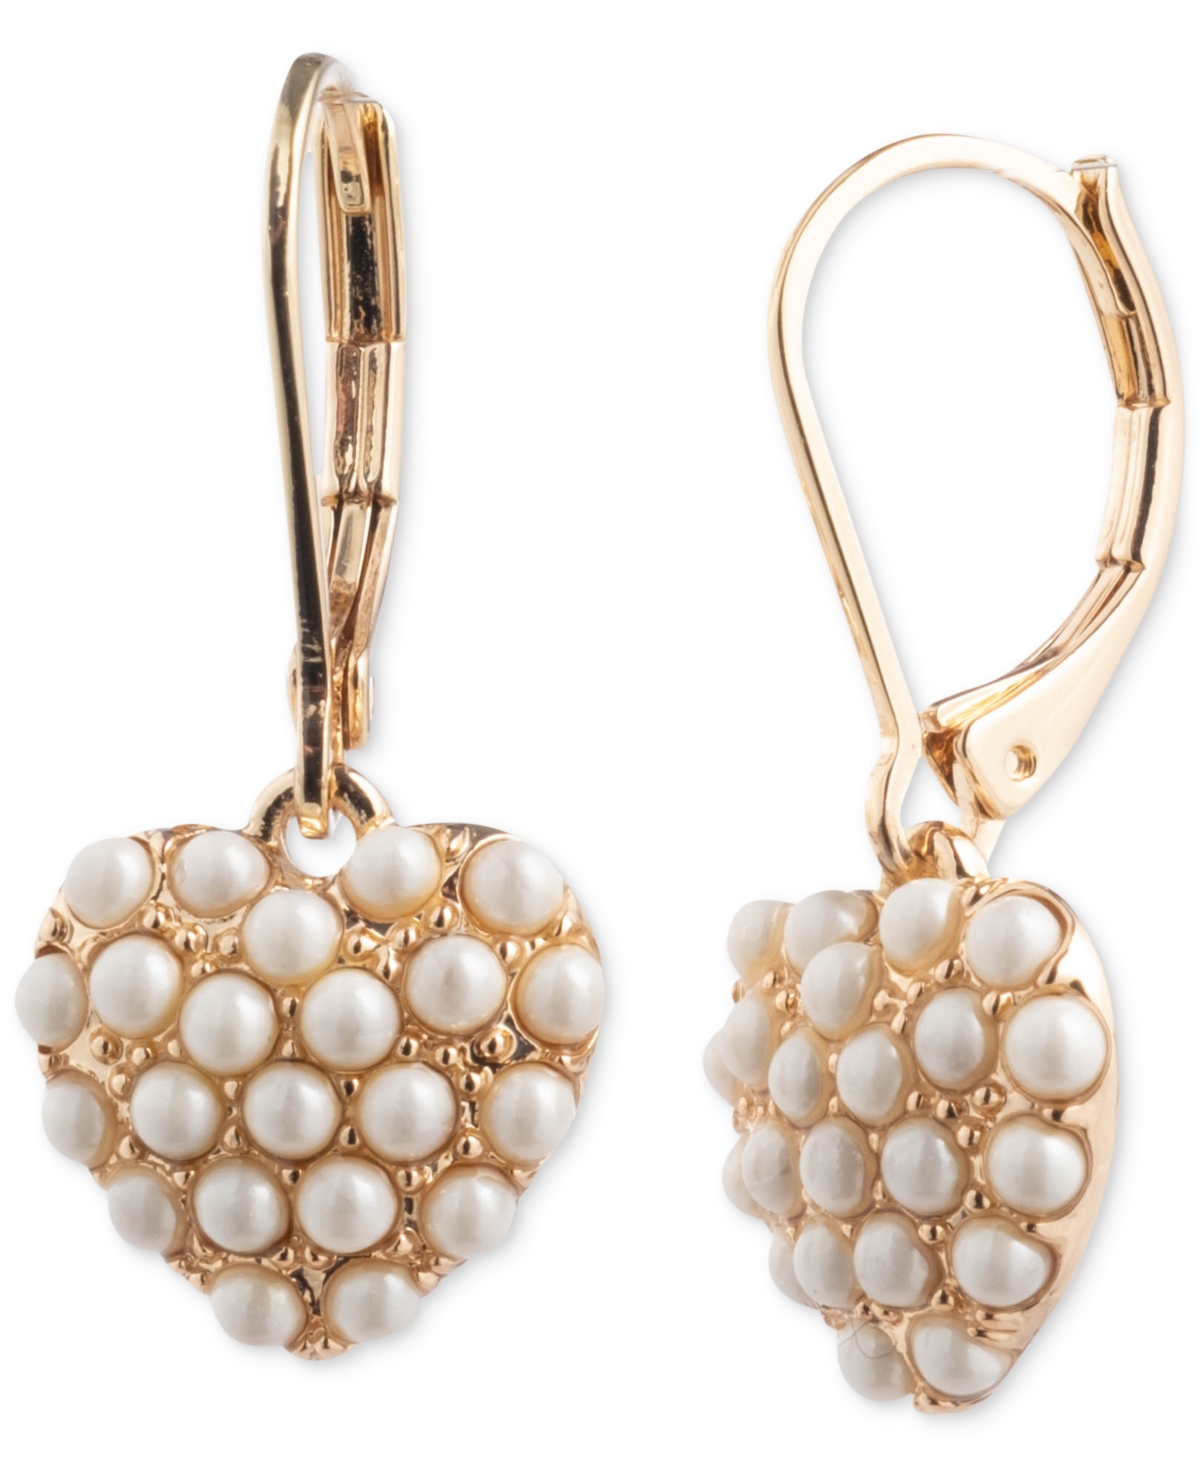 Gold-Tone Imitation Pearl Heart Drop Earrings - White